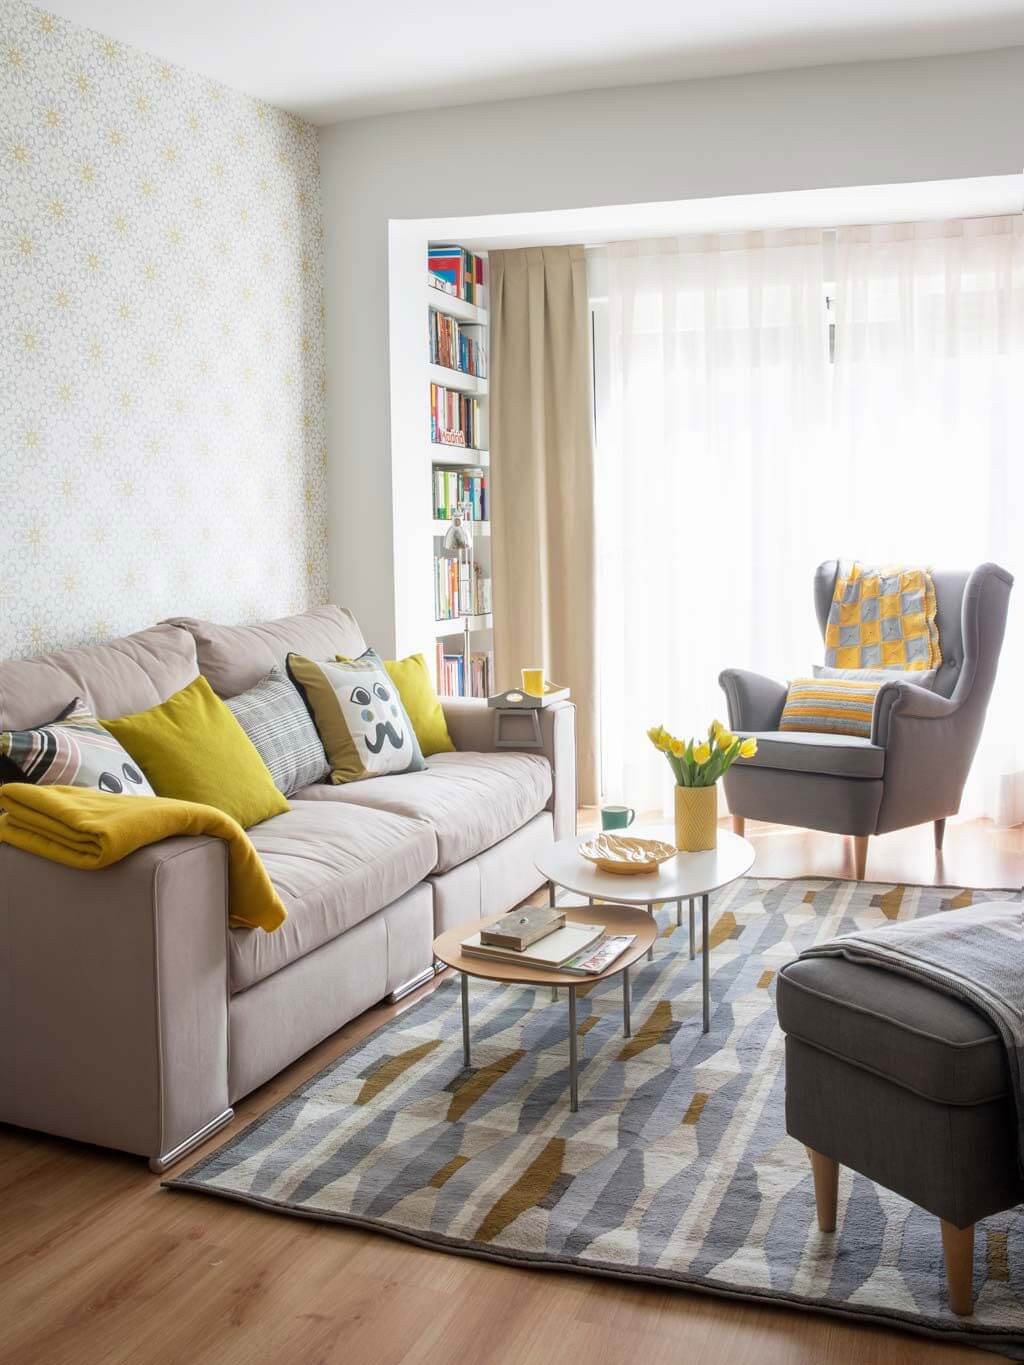 Small Apartment Living Room Ideas Fresh 25 Best Small Living Room Decor and Design Ideas for 2019